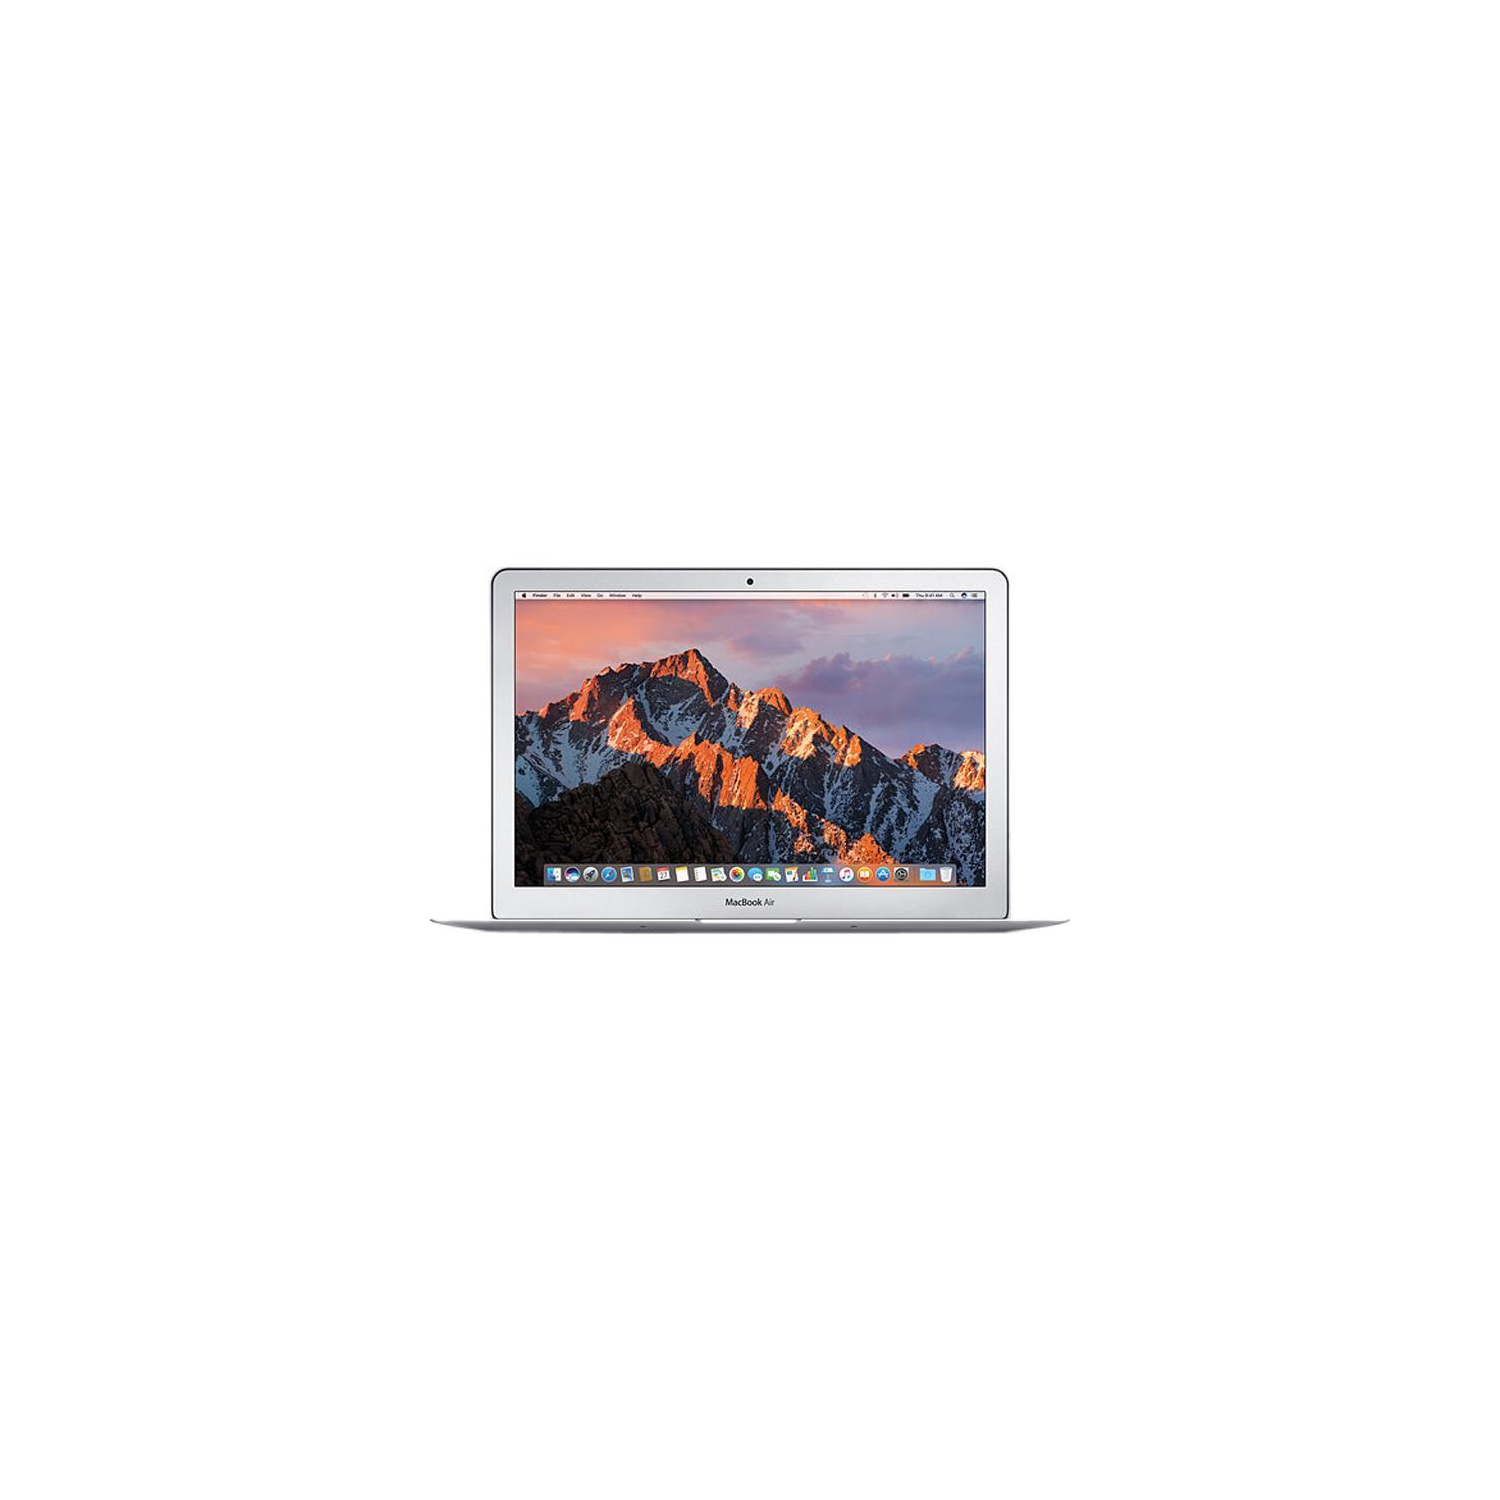 Refurbished (Good) - Apple MacBook(MQD32LL) Air 